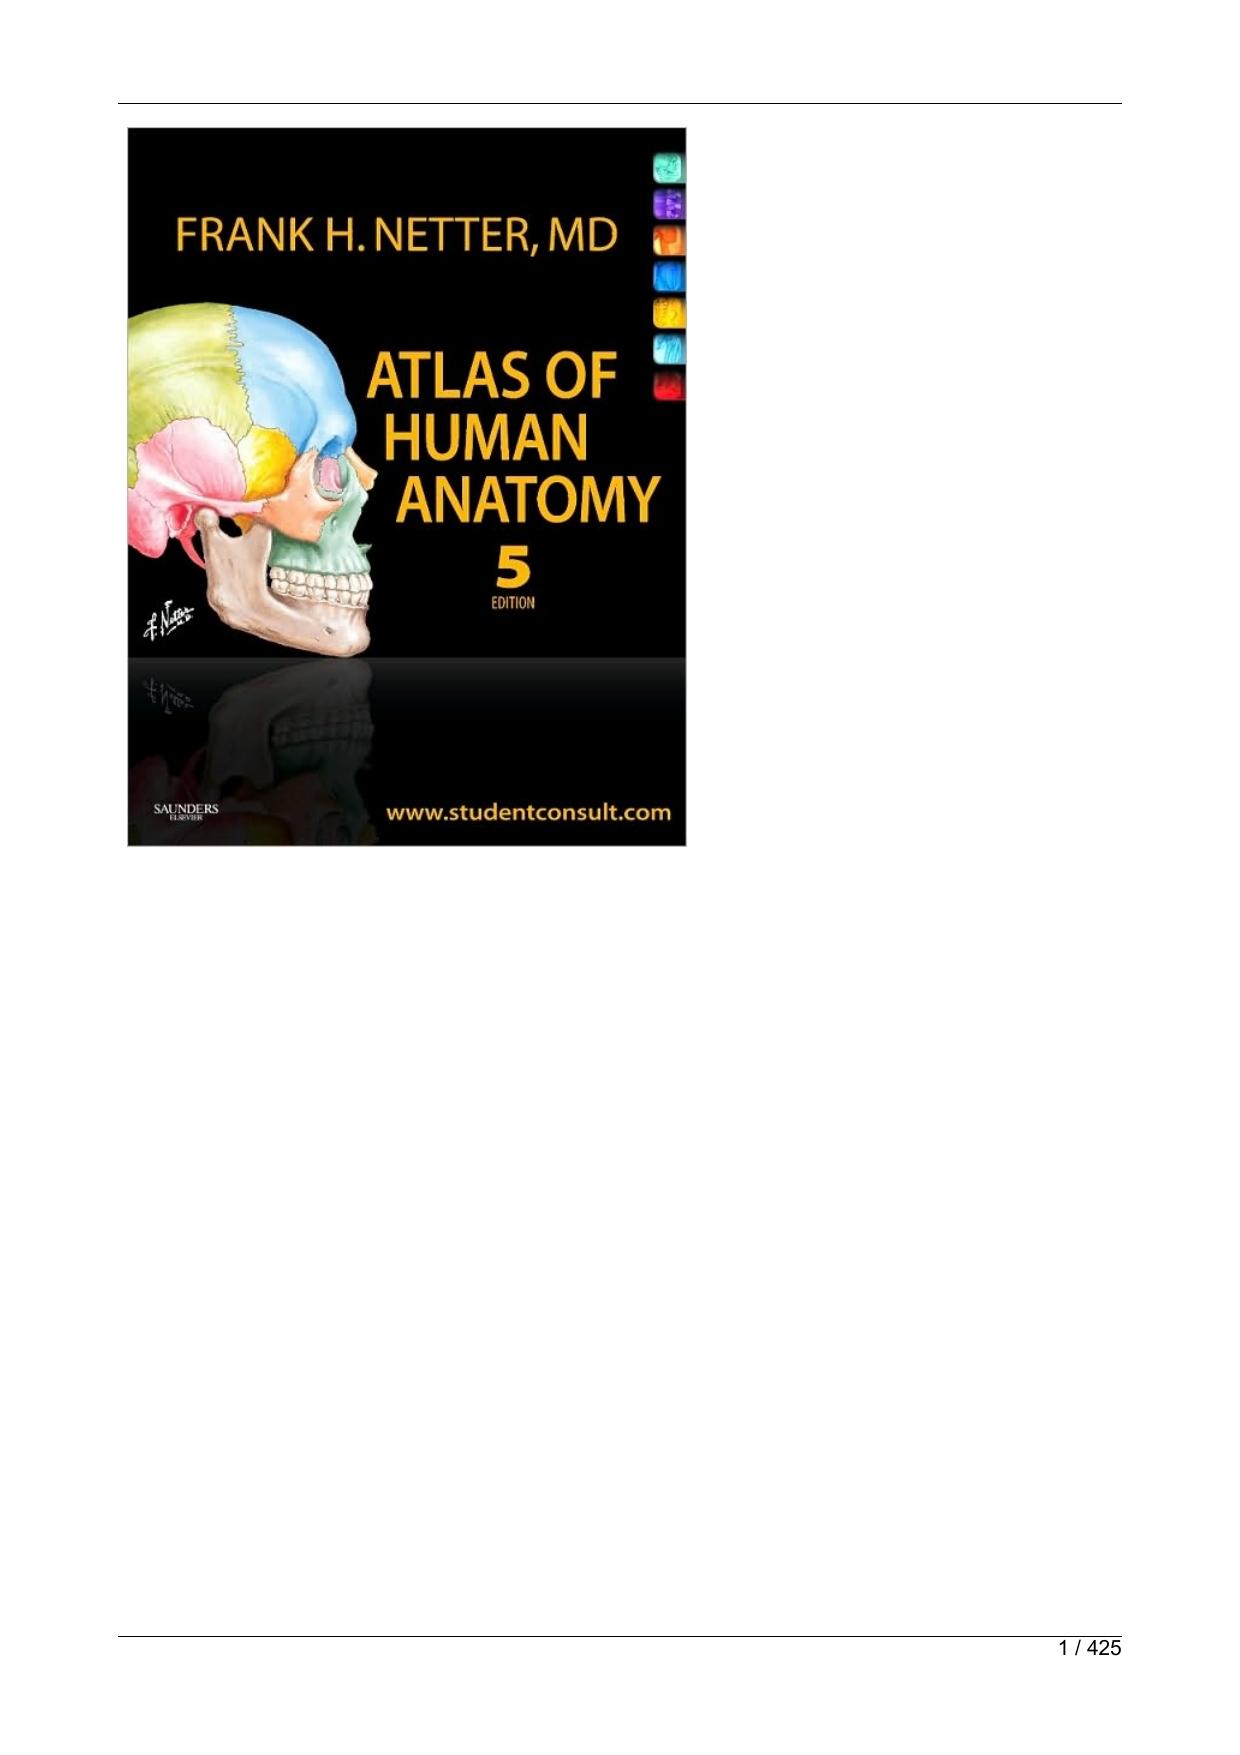 Atlas of Human Anatomy 5th ed.